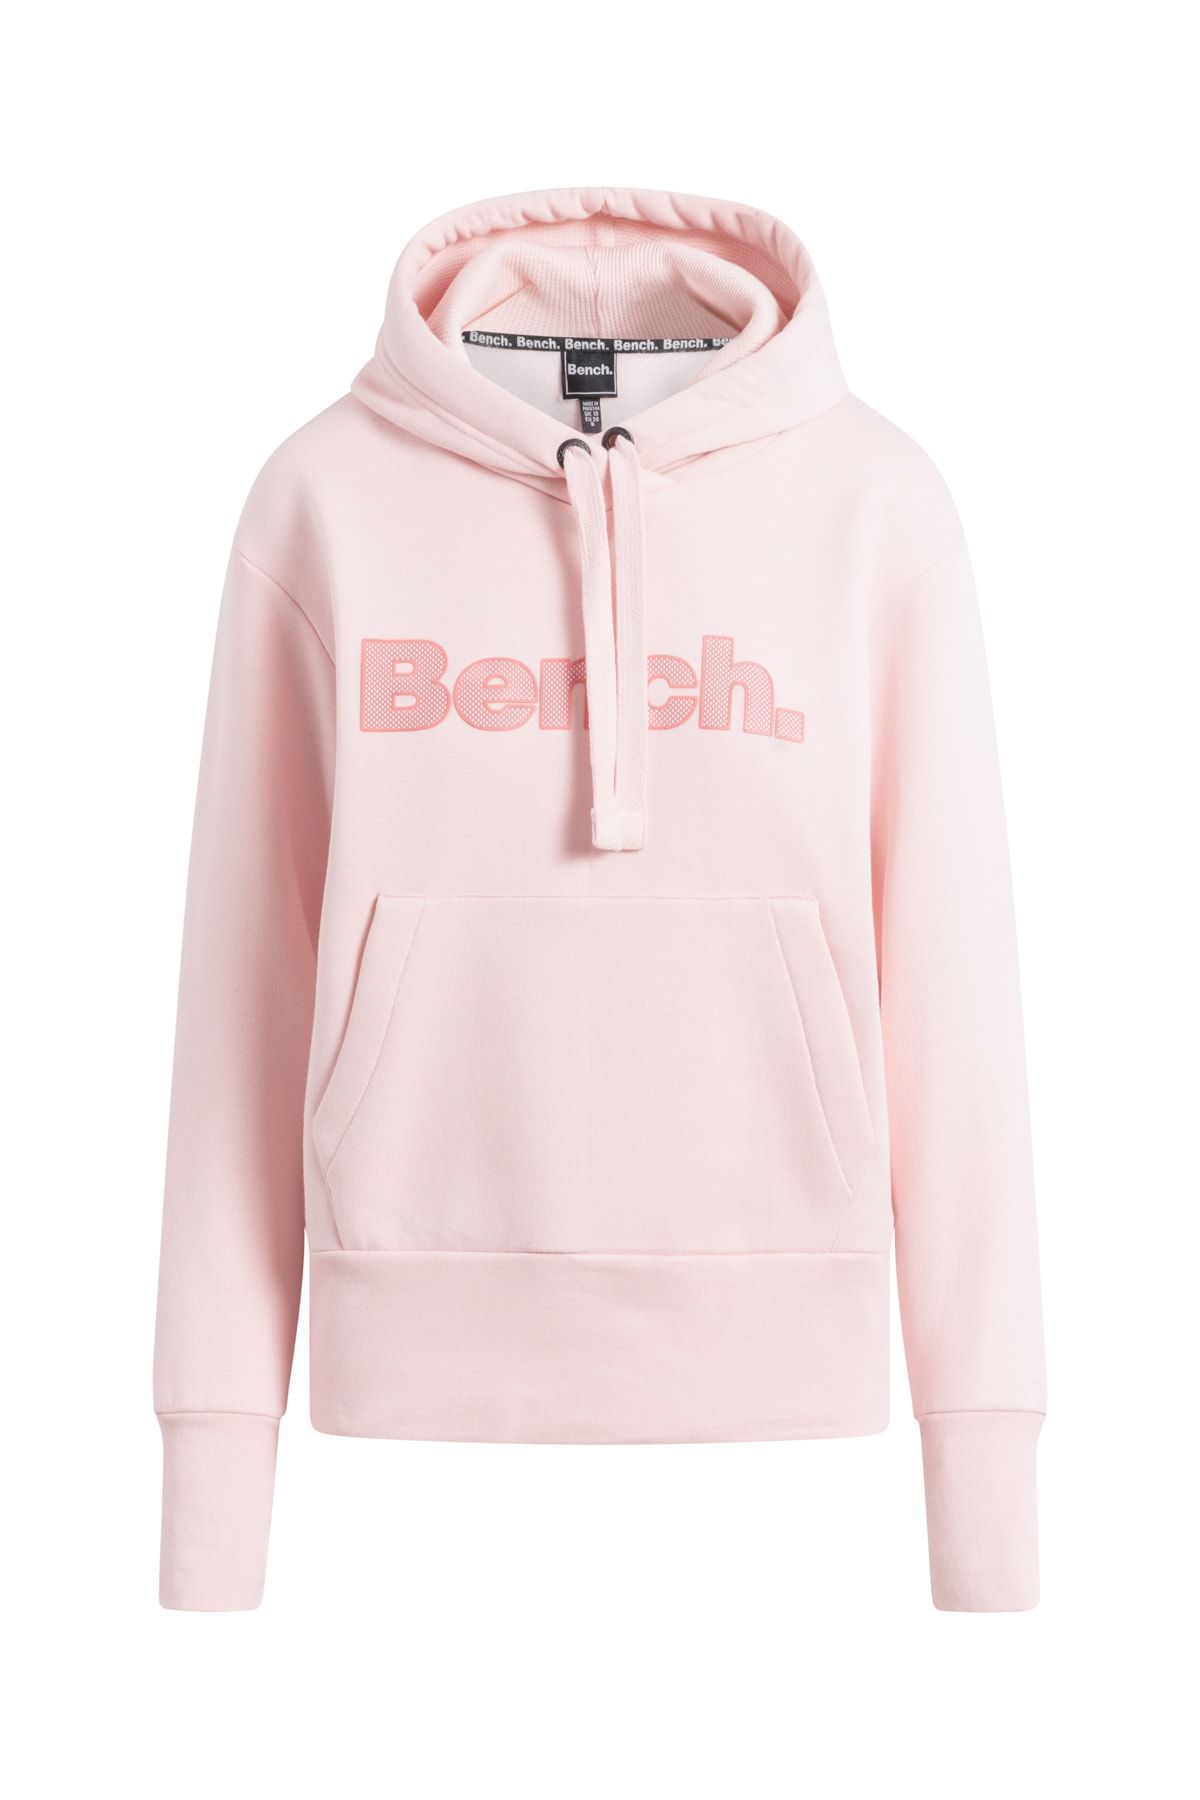 BENCH Sweatshirt - Rosa - Regular Fit - Trendyol